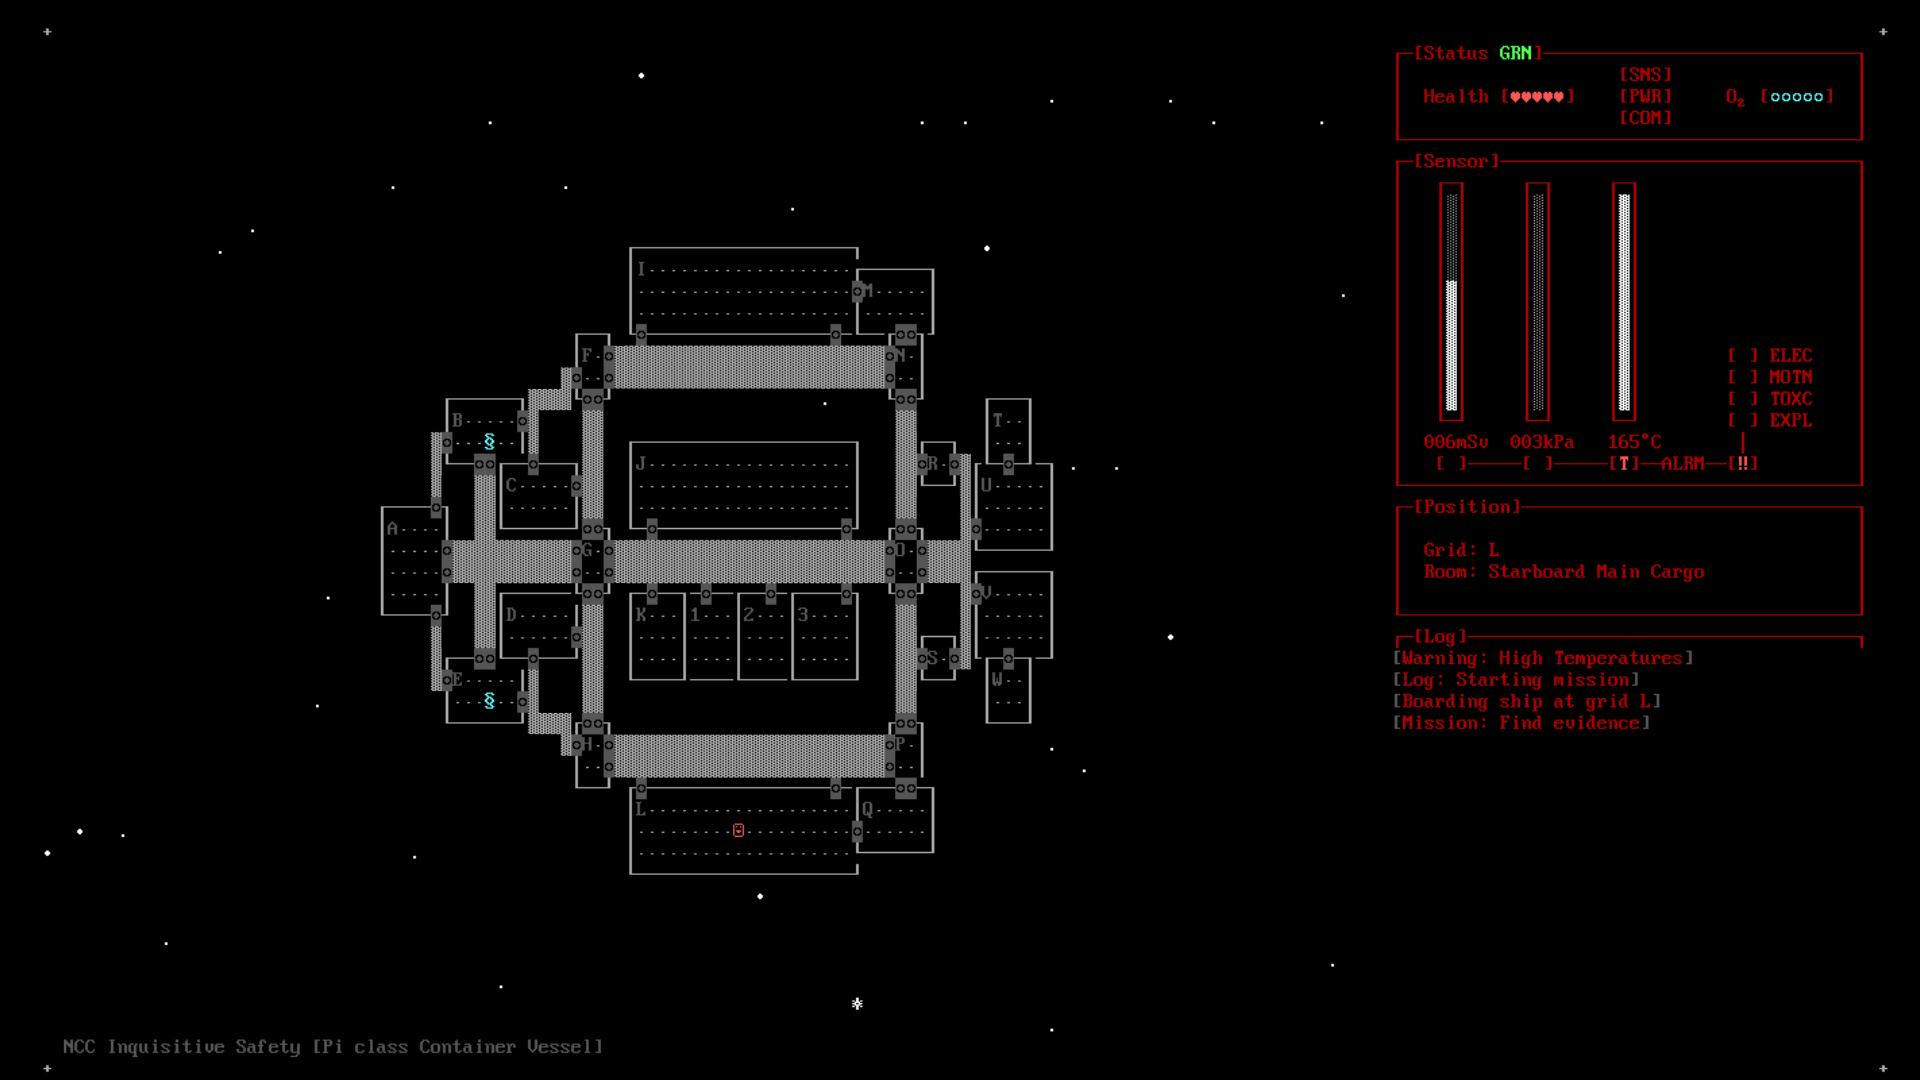 A screenshot of Cayenne MacKormik showing a ship layout and HUD.